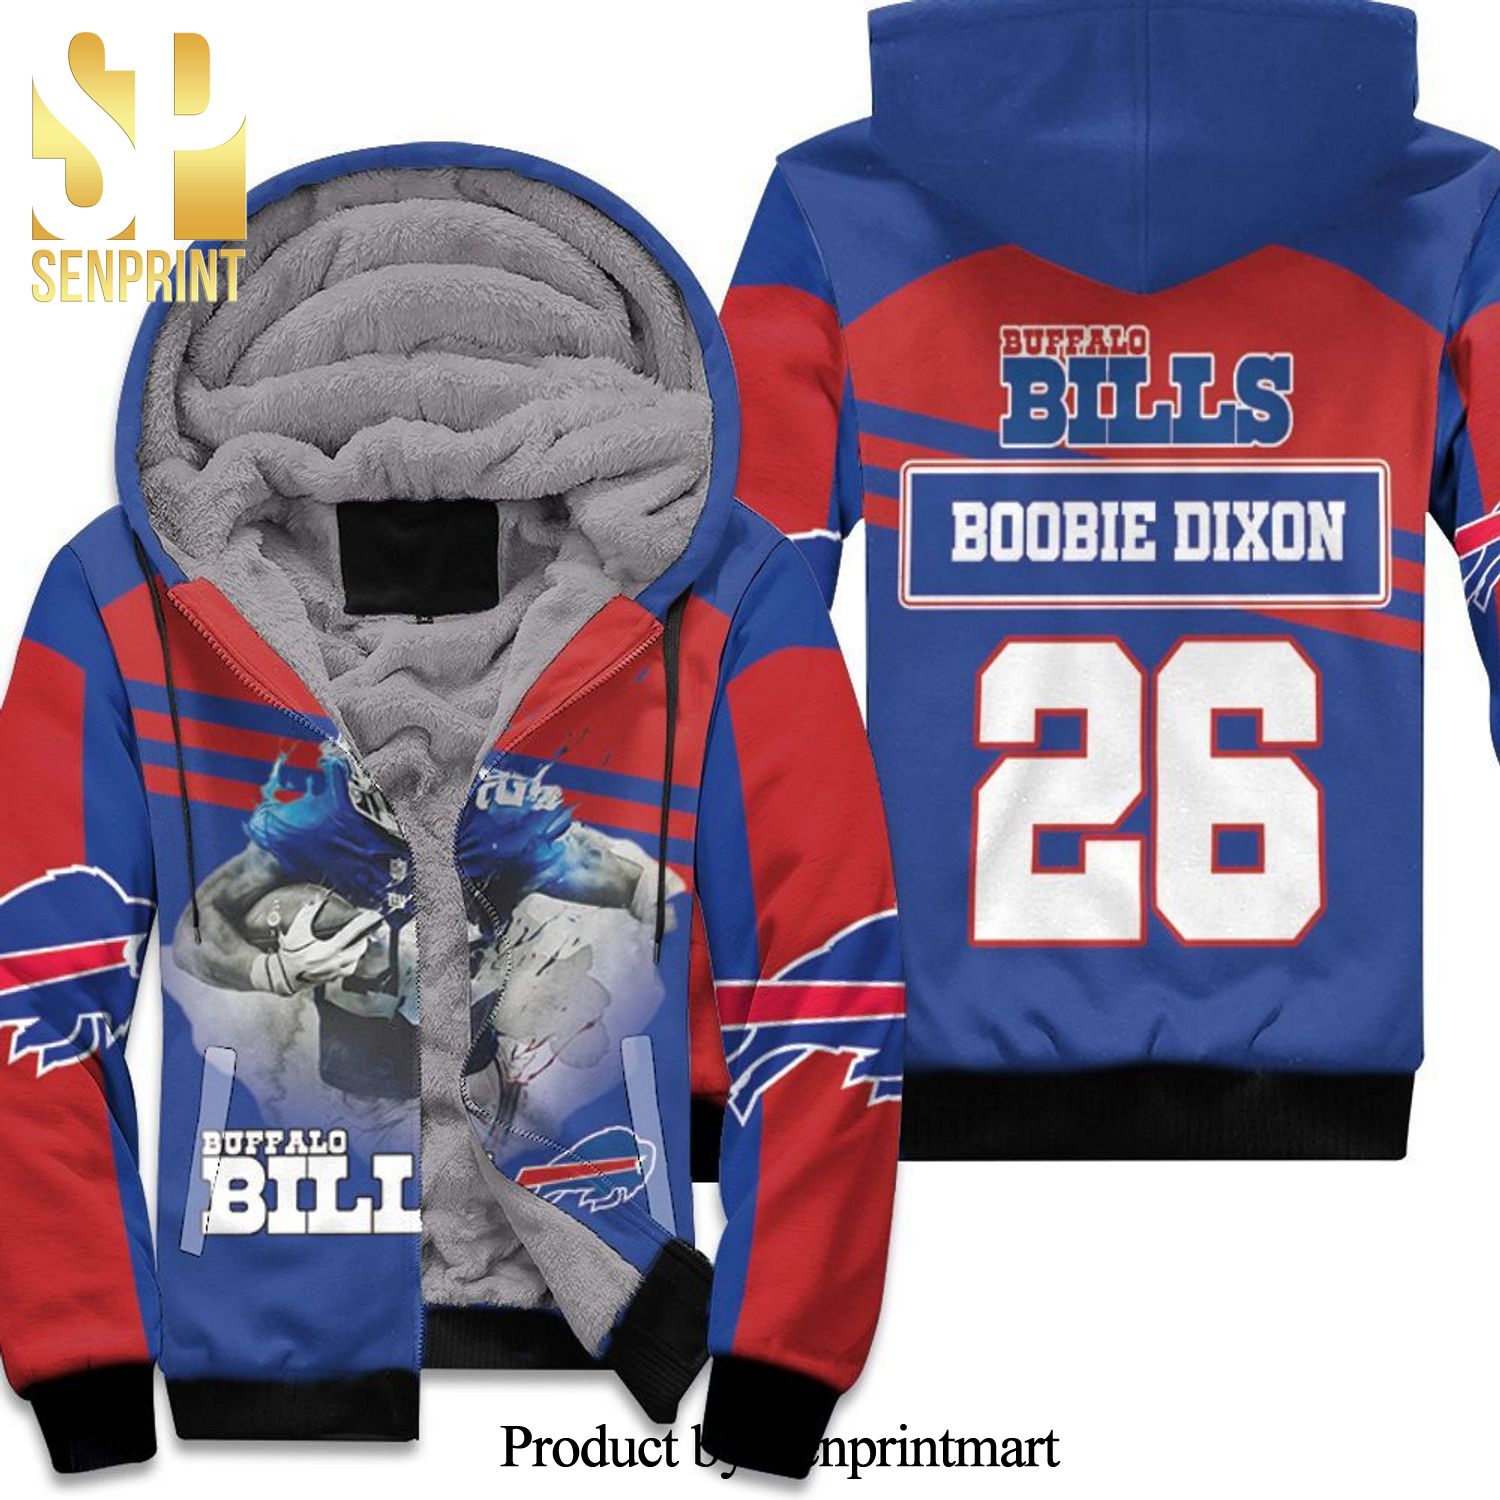 Buffalo Bills 26 Boobie Dixon Afc East Champs Hot Outfit Unisex Fleece Hoodie